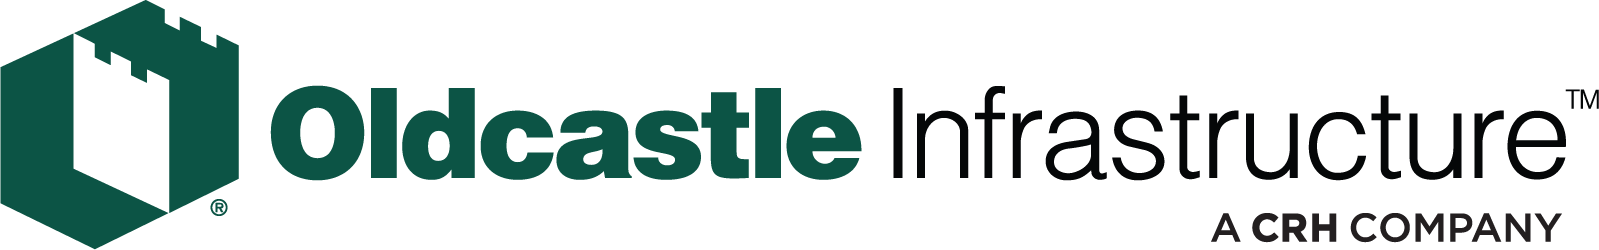 Oldcastle Logo - Communications Archives Enclosure Solutions